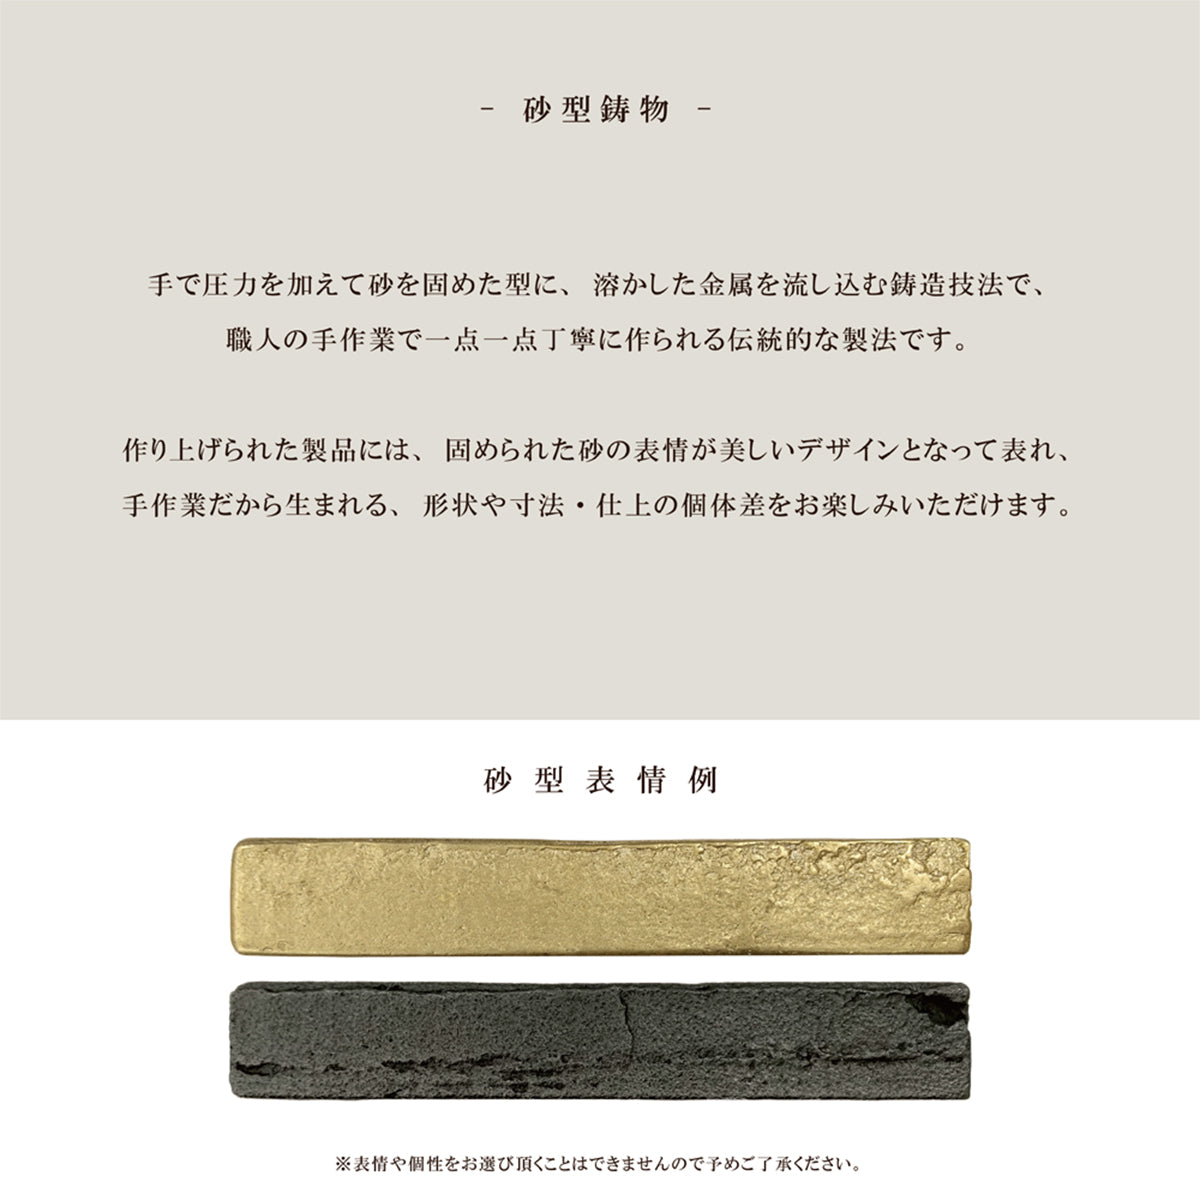 Brass Casting 真鍮鋳物 ハンドル (大型 黒染め HB-204)